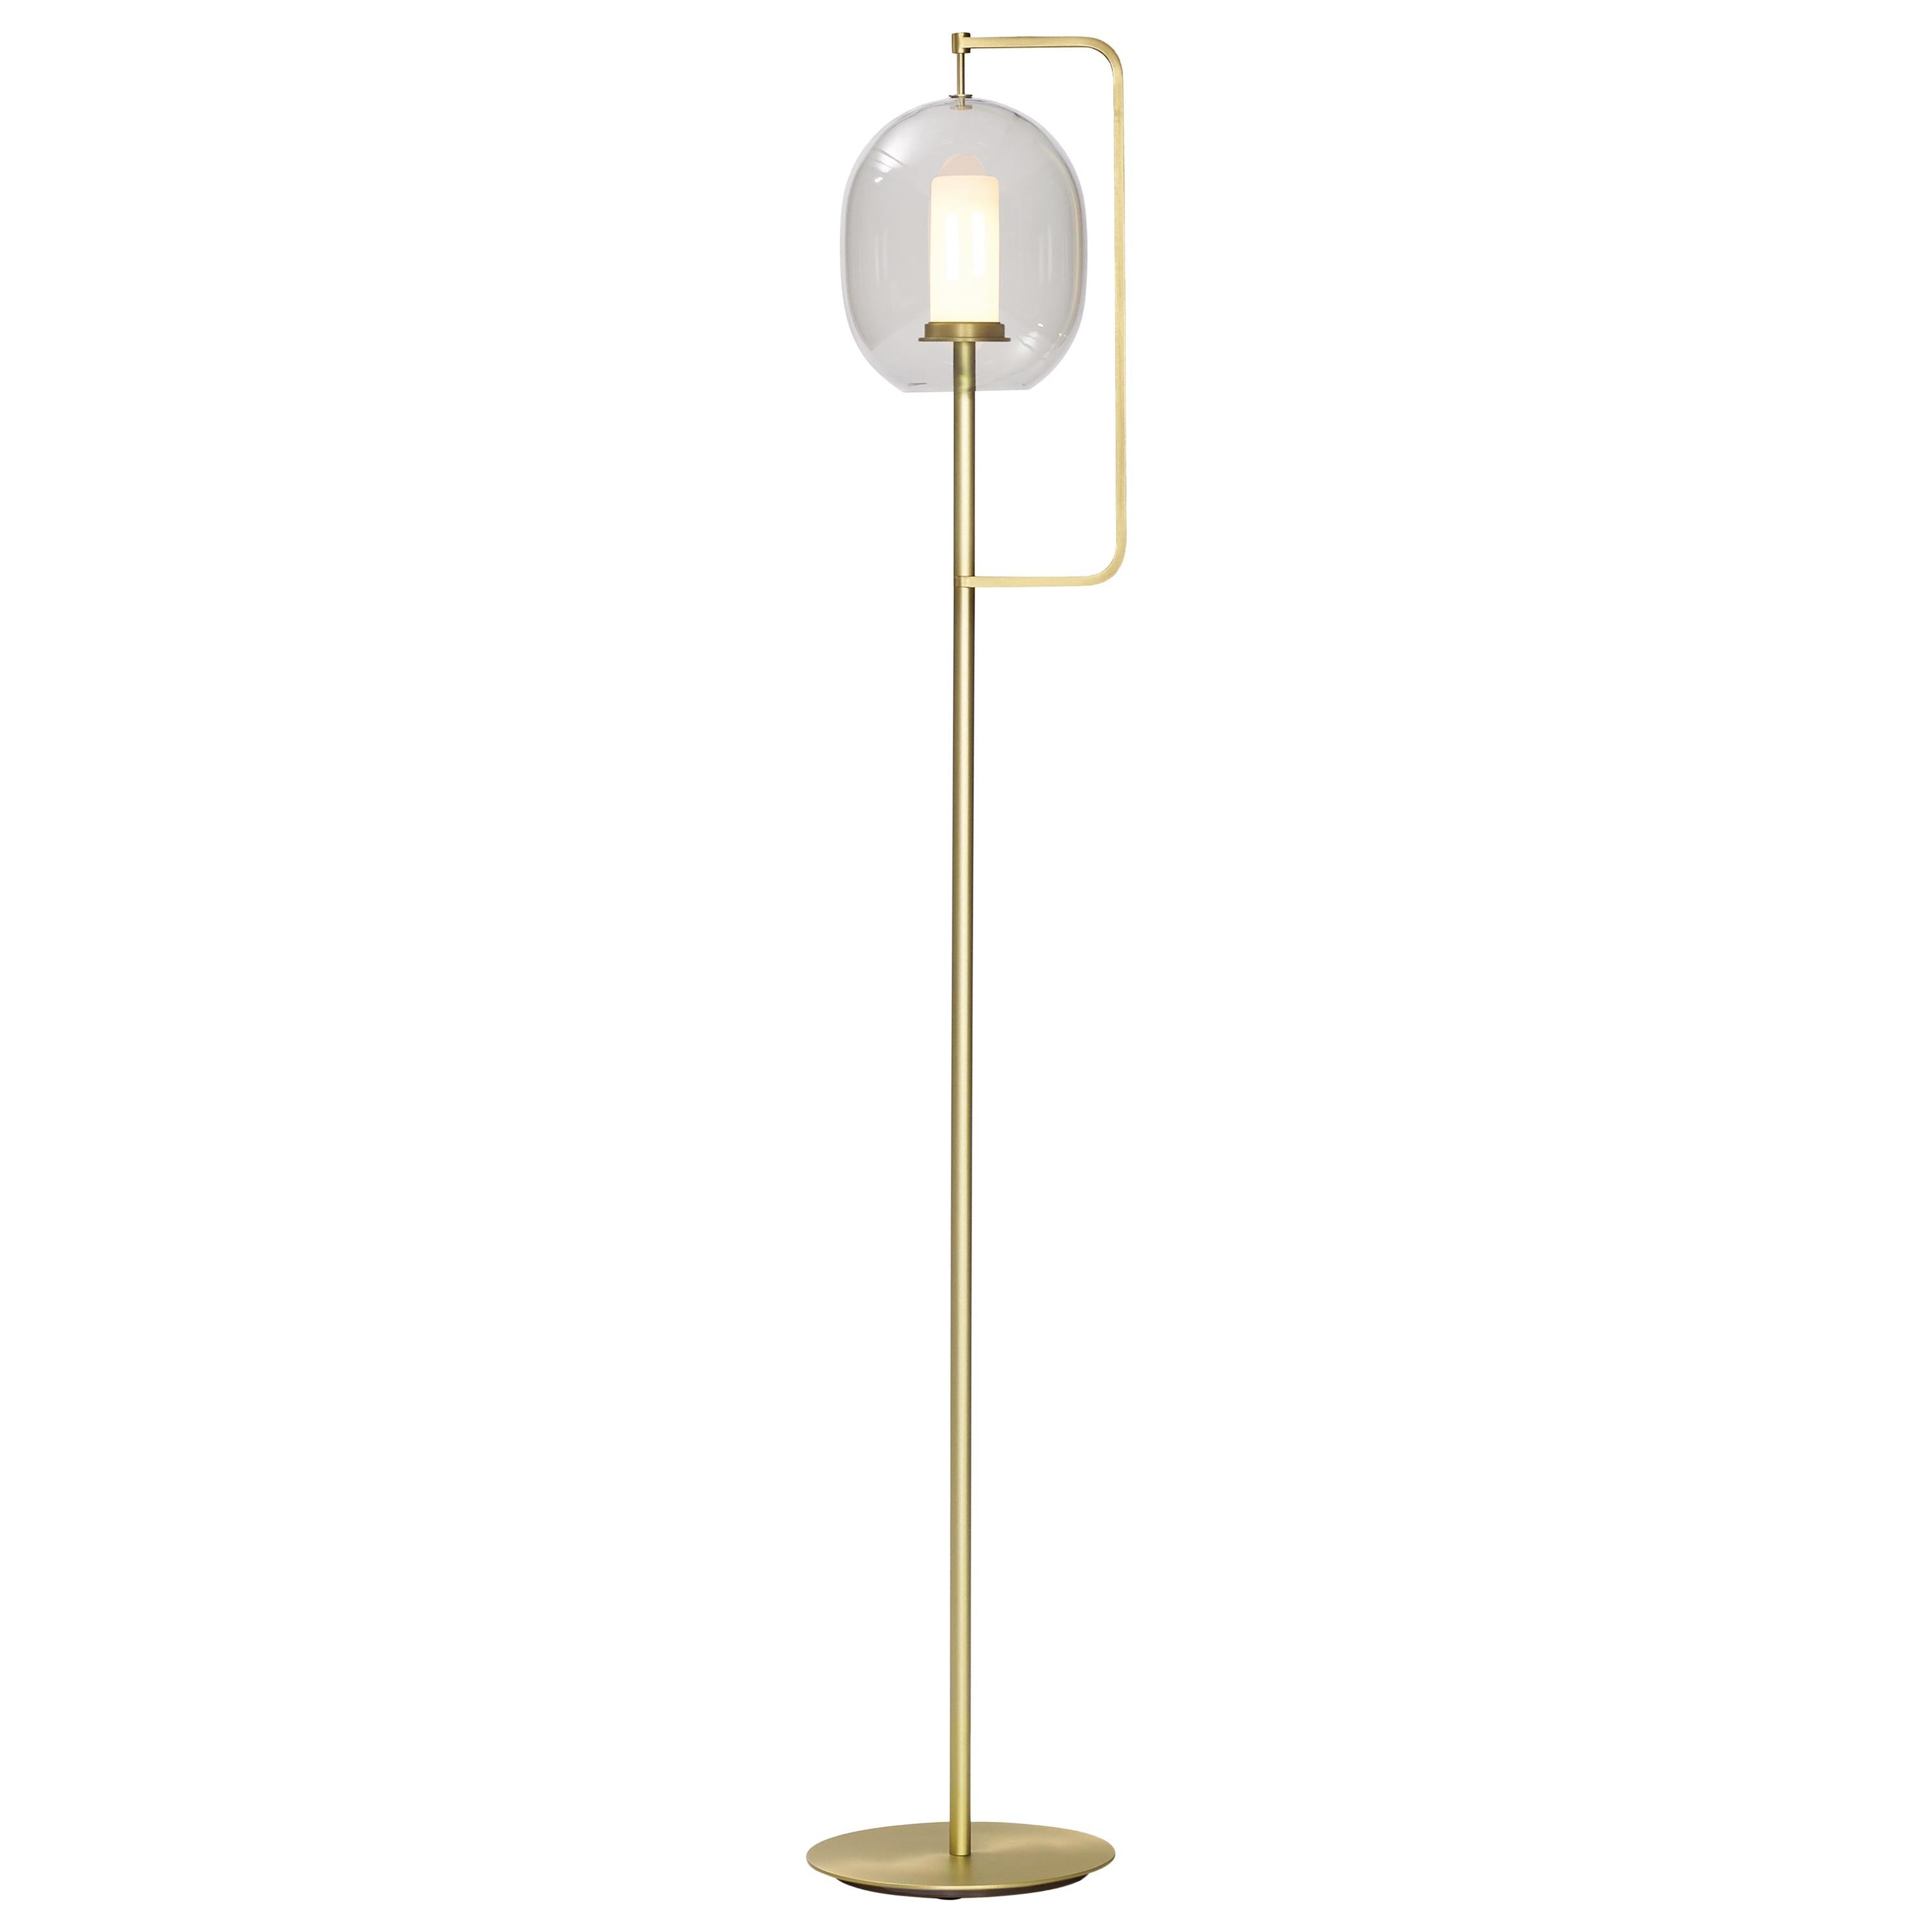 ClassiCon Lantern Light Medium Floor Lamp in Brass by Neri&Hu